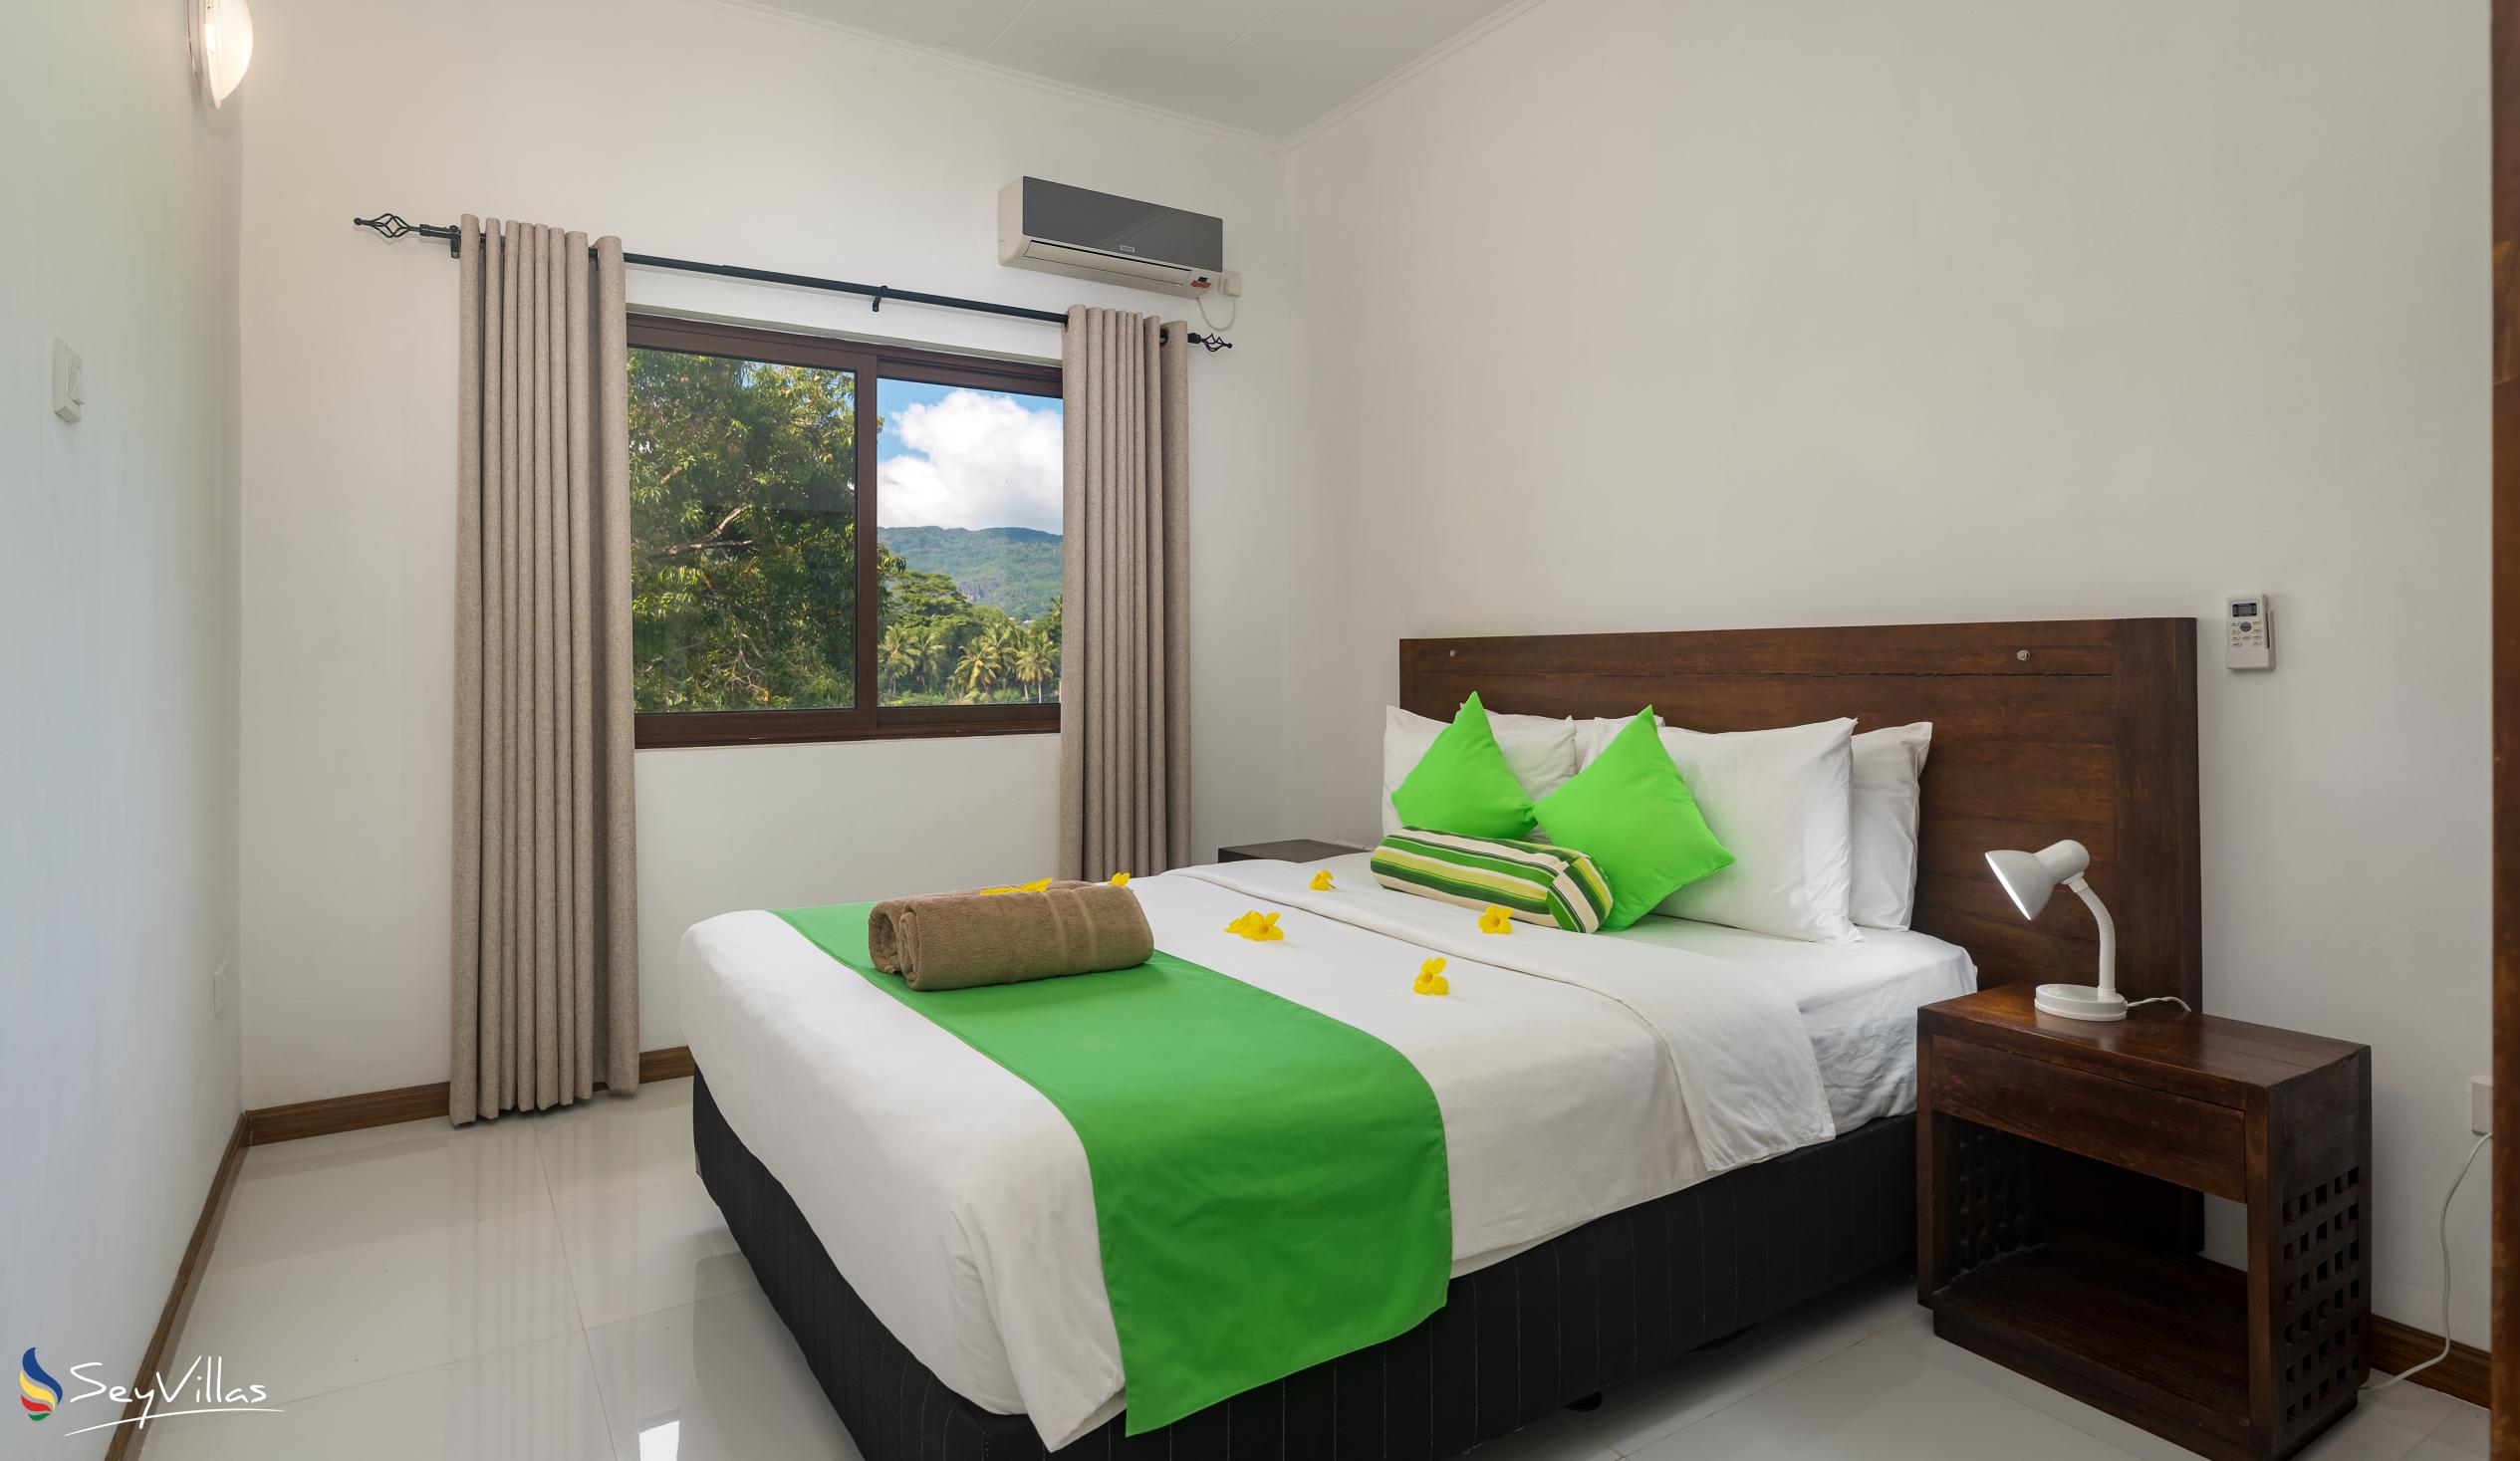 Foto 105: Kanasuk Self Catering Apartments - Appartamento Cinnamon con 2 camere - Mahé (Seychelles)